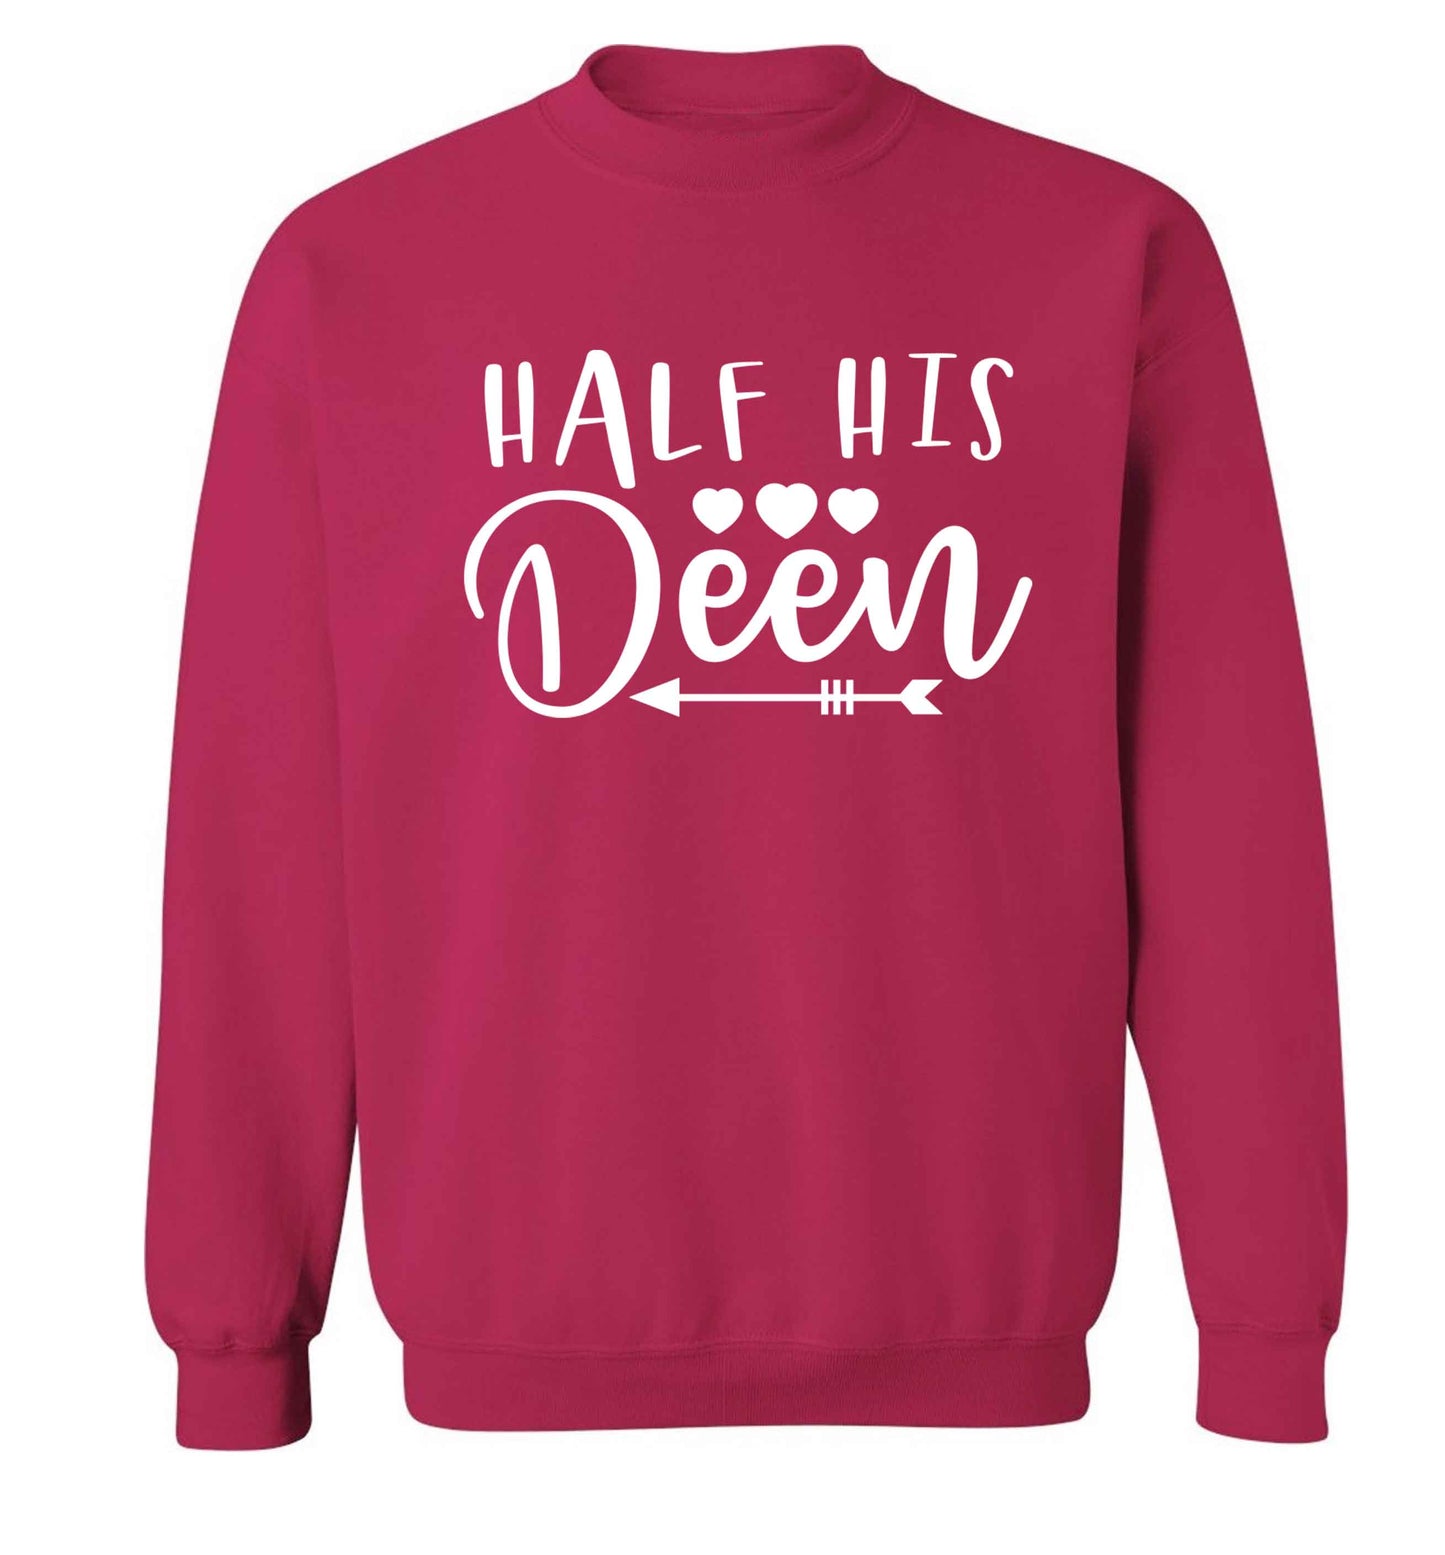 Half his deen Adult's unisex pink Sweater 2XL